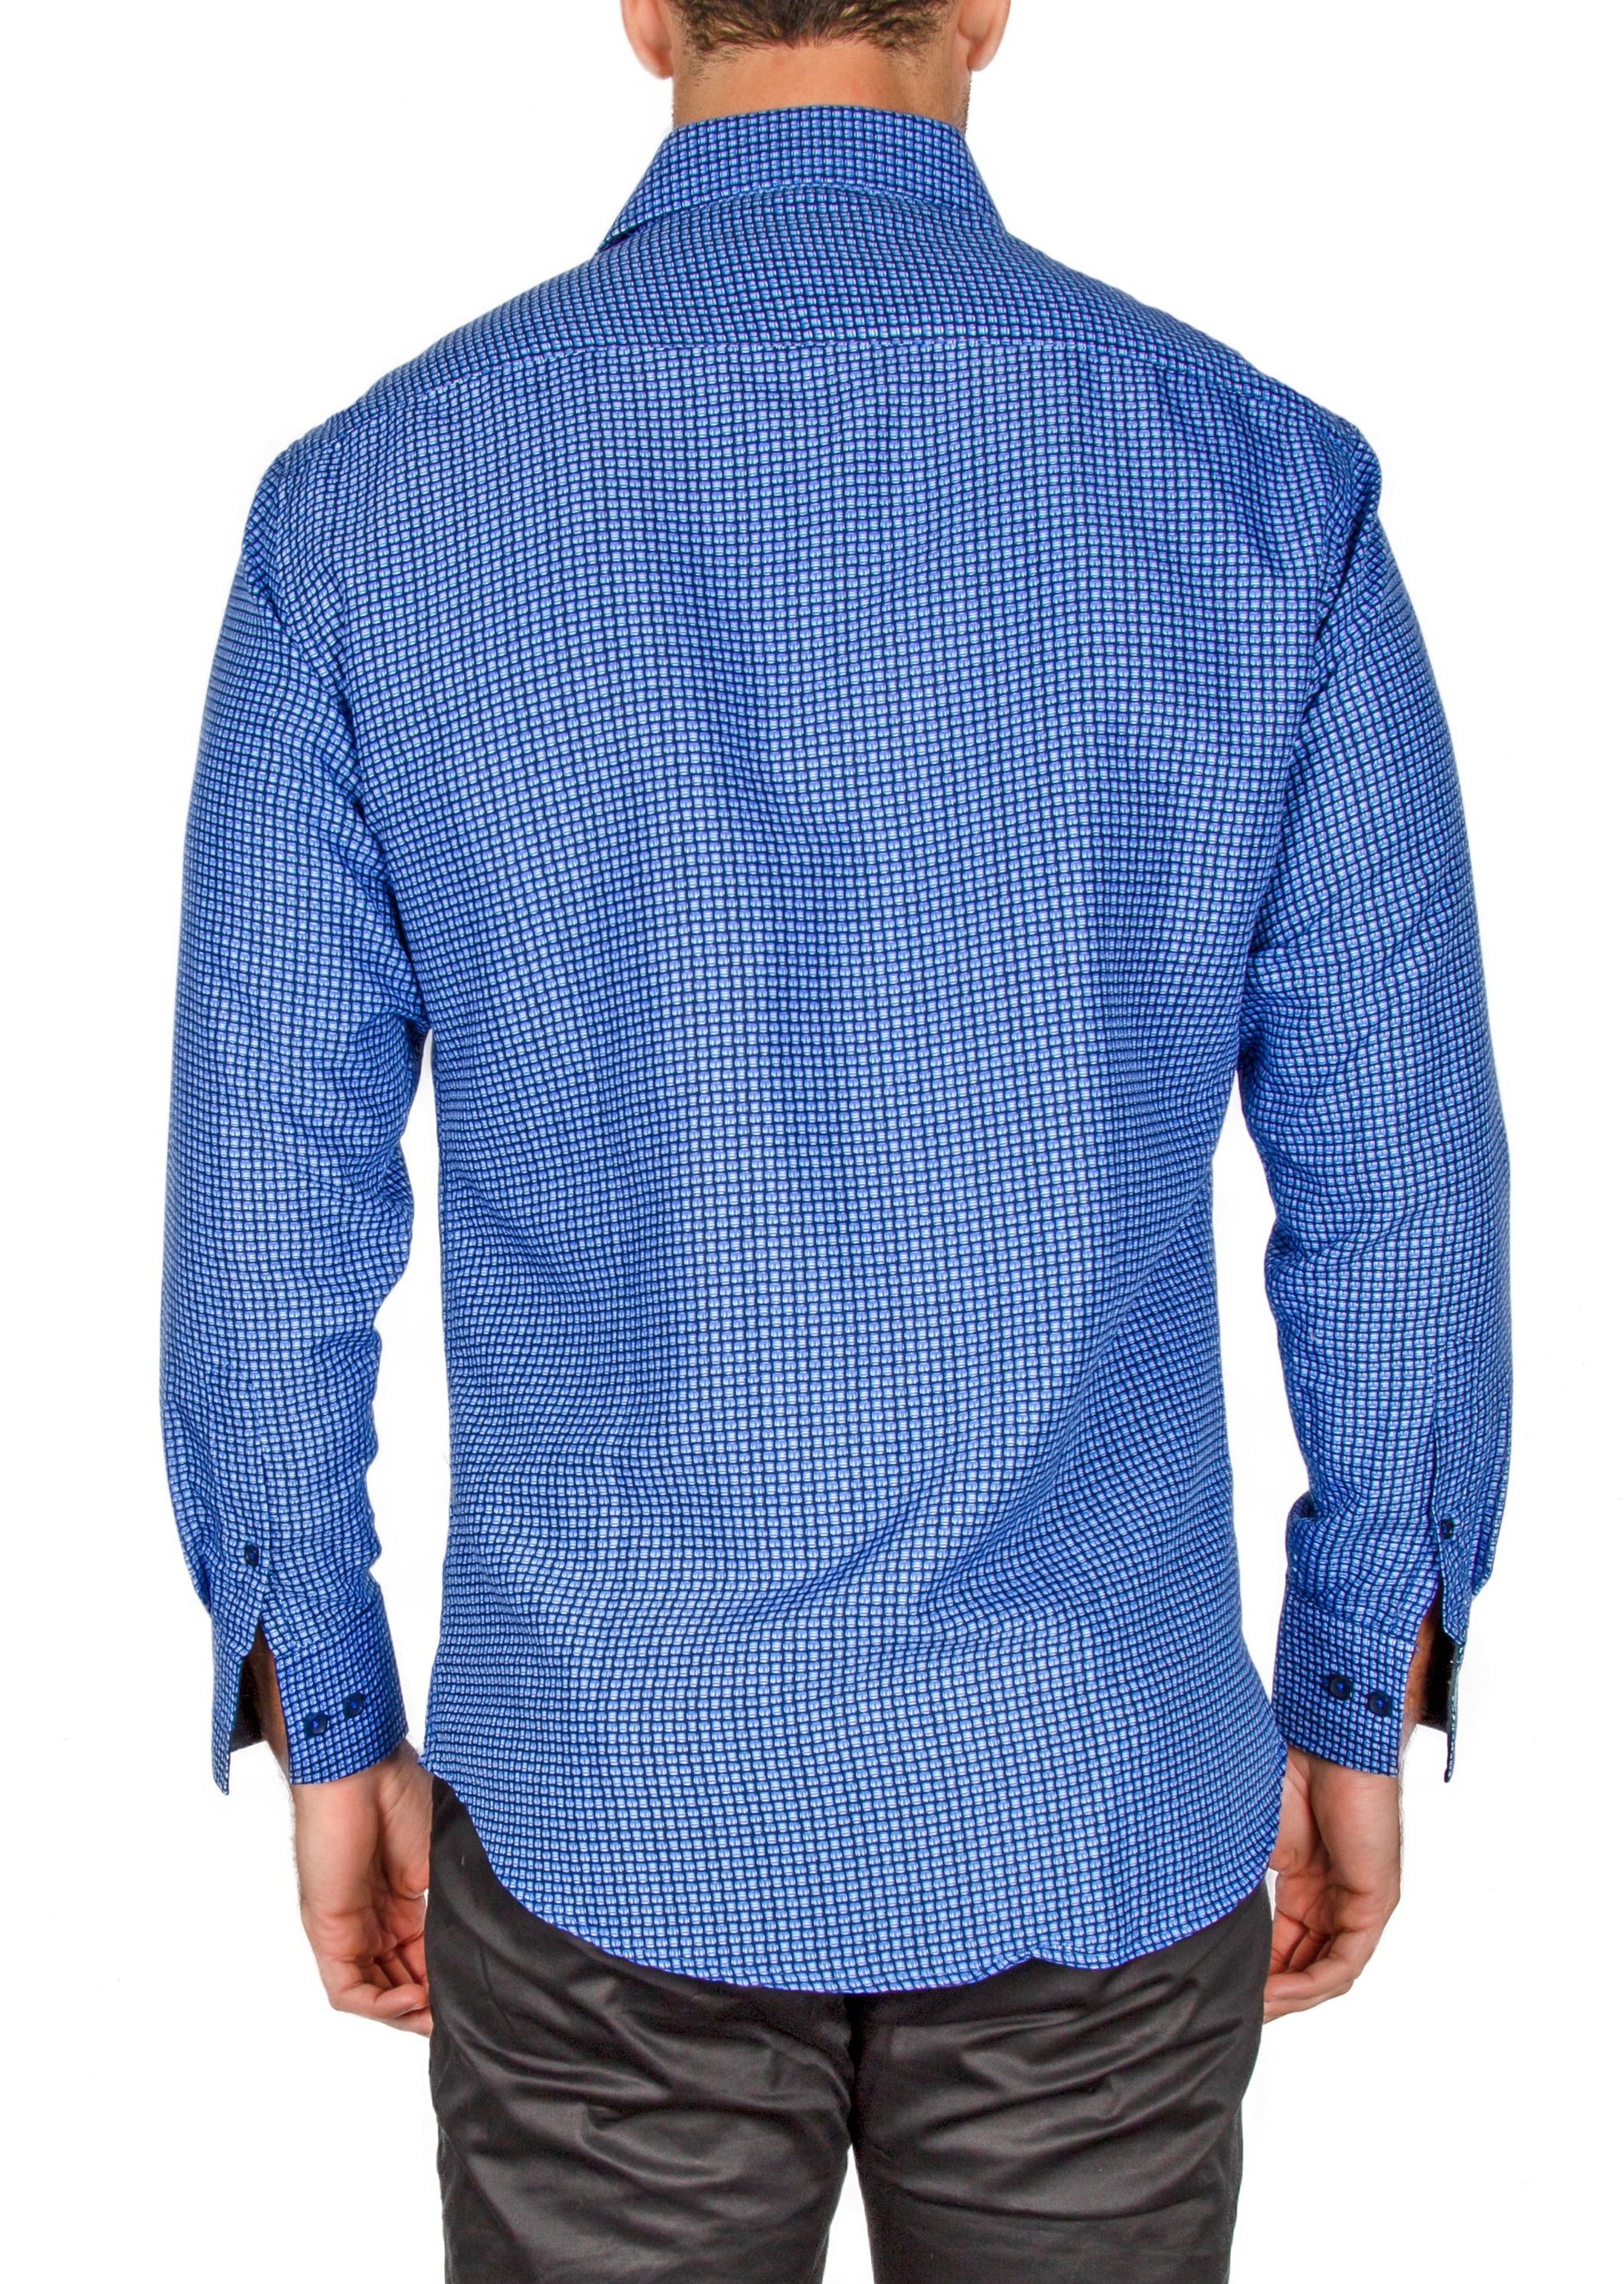 bc-182355-mens-royal-blue-button-up-long-sleeve-dress-shirt